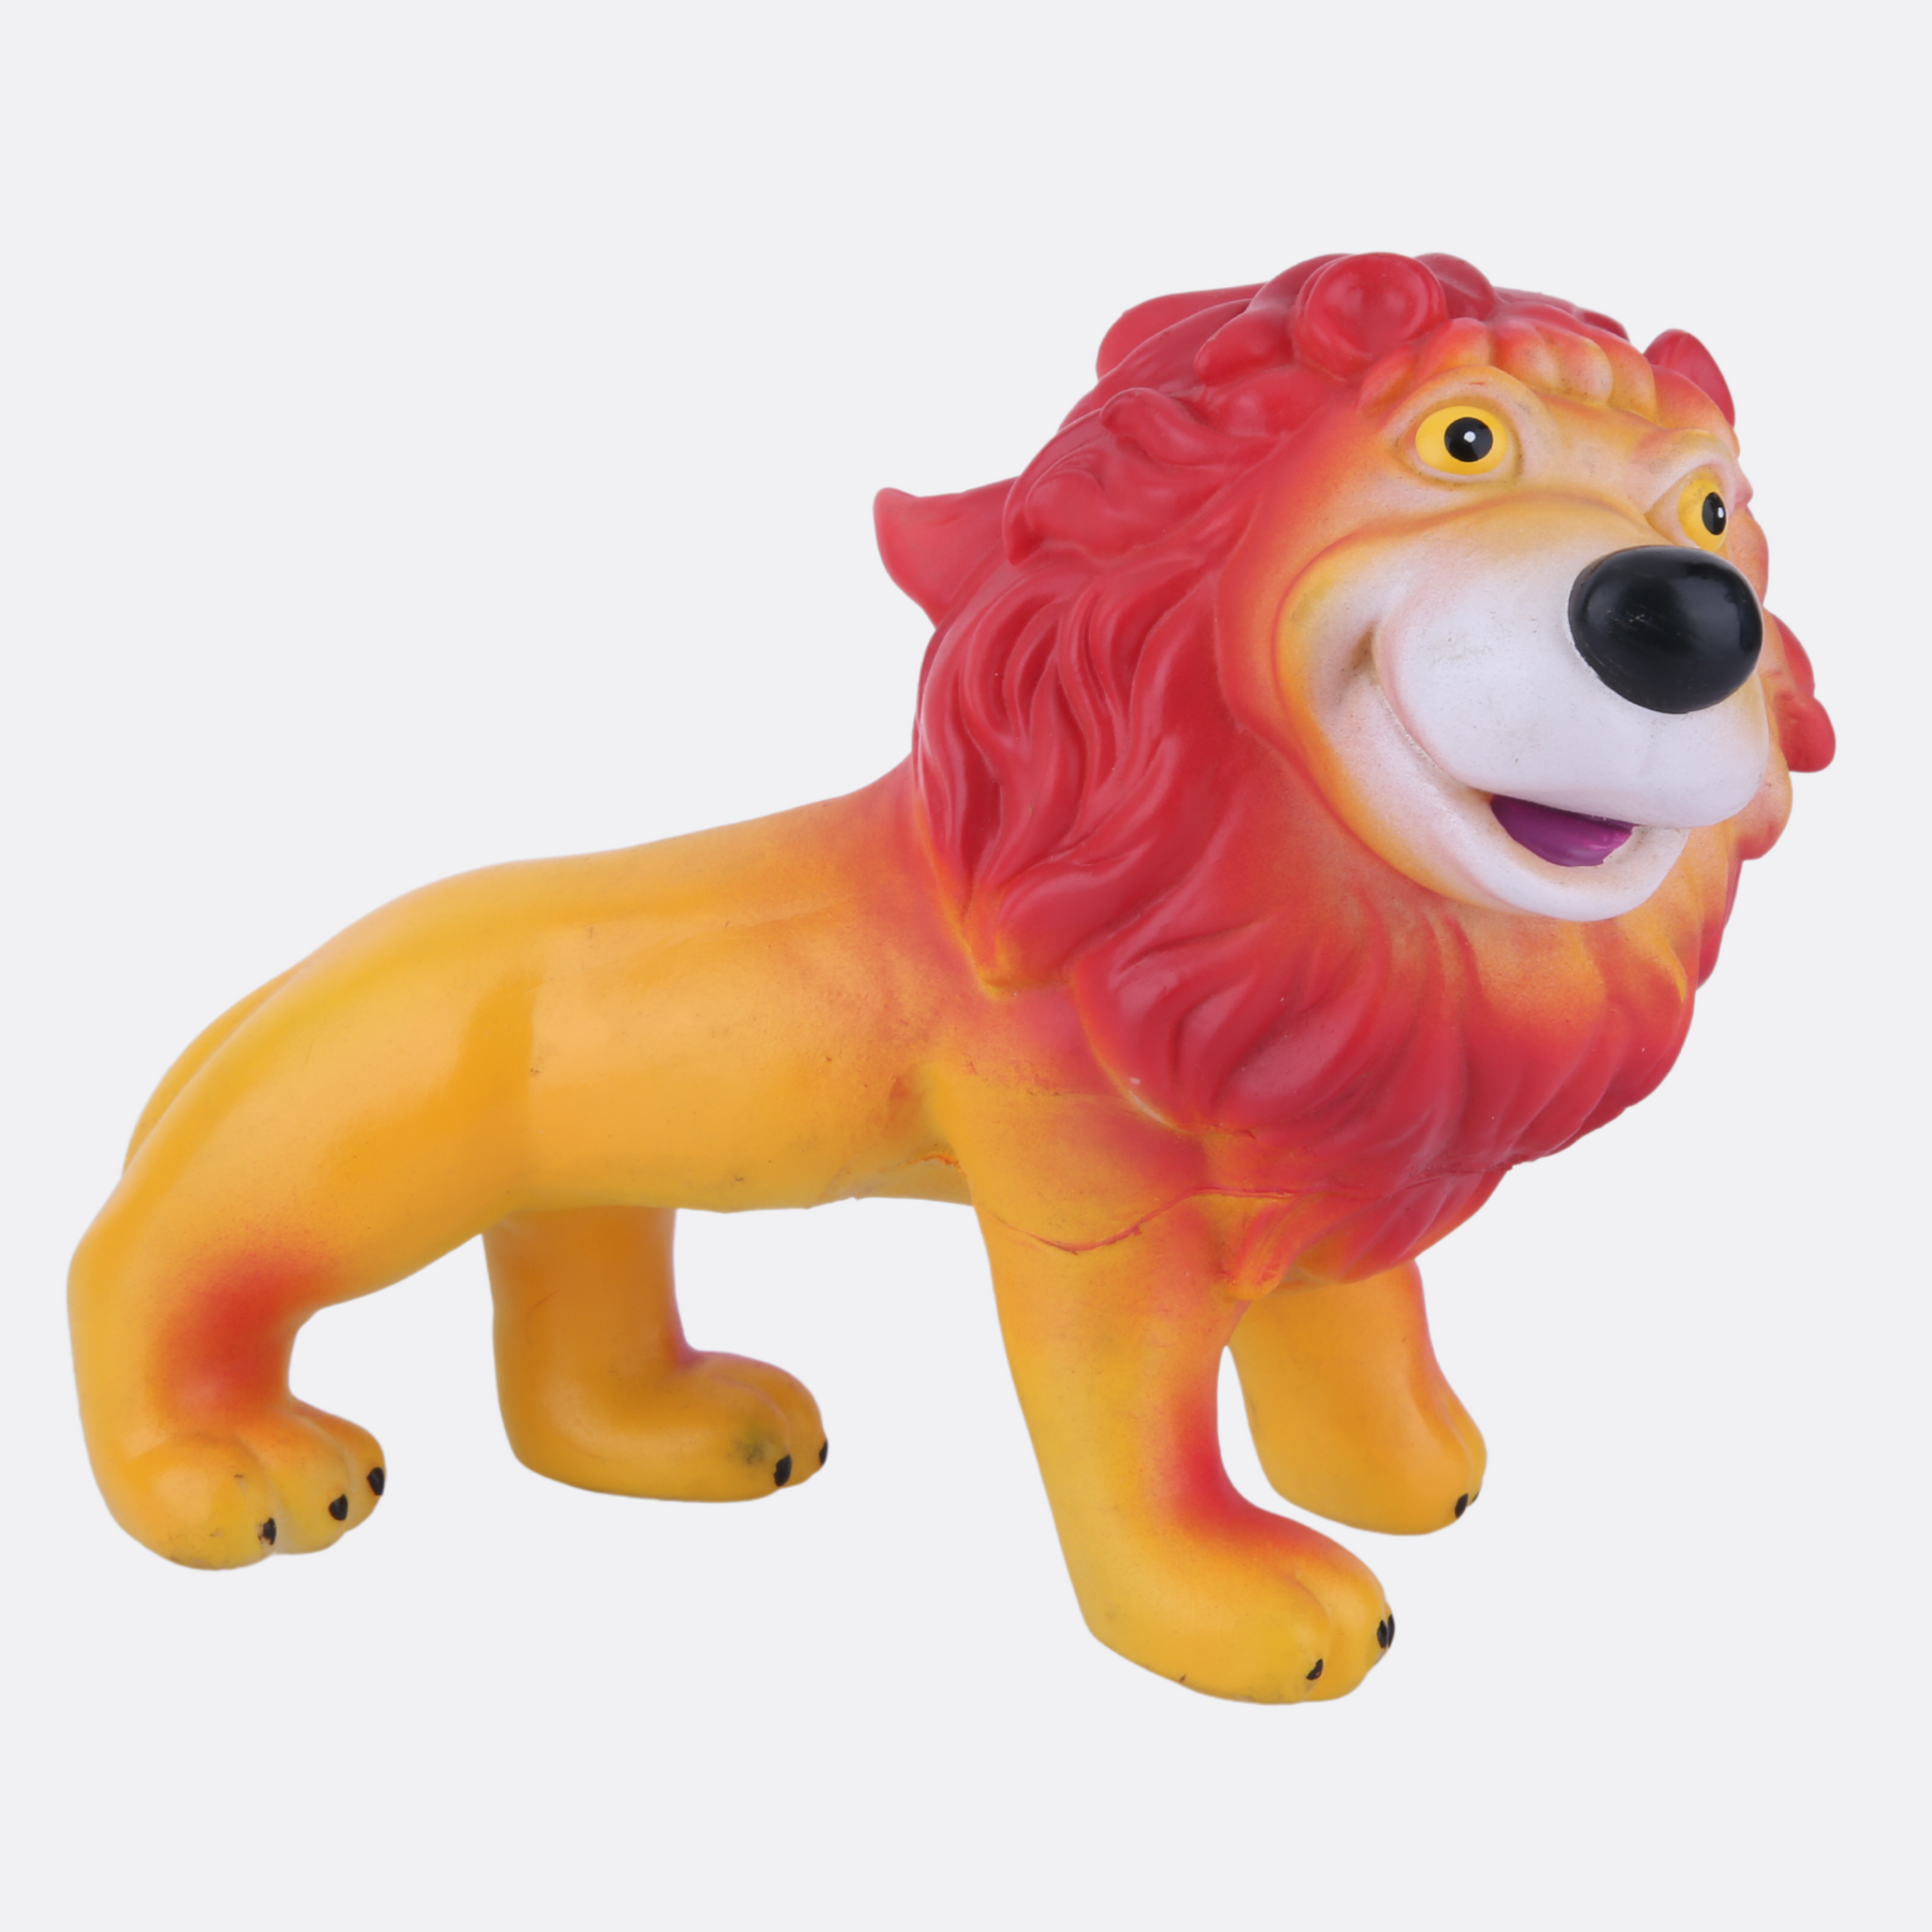 Squishy Lion toy